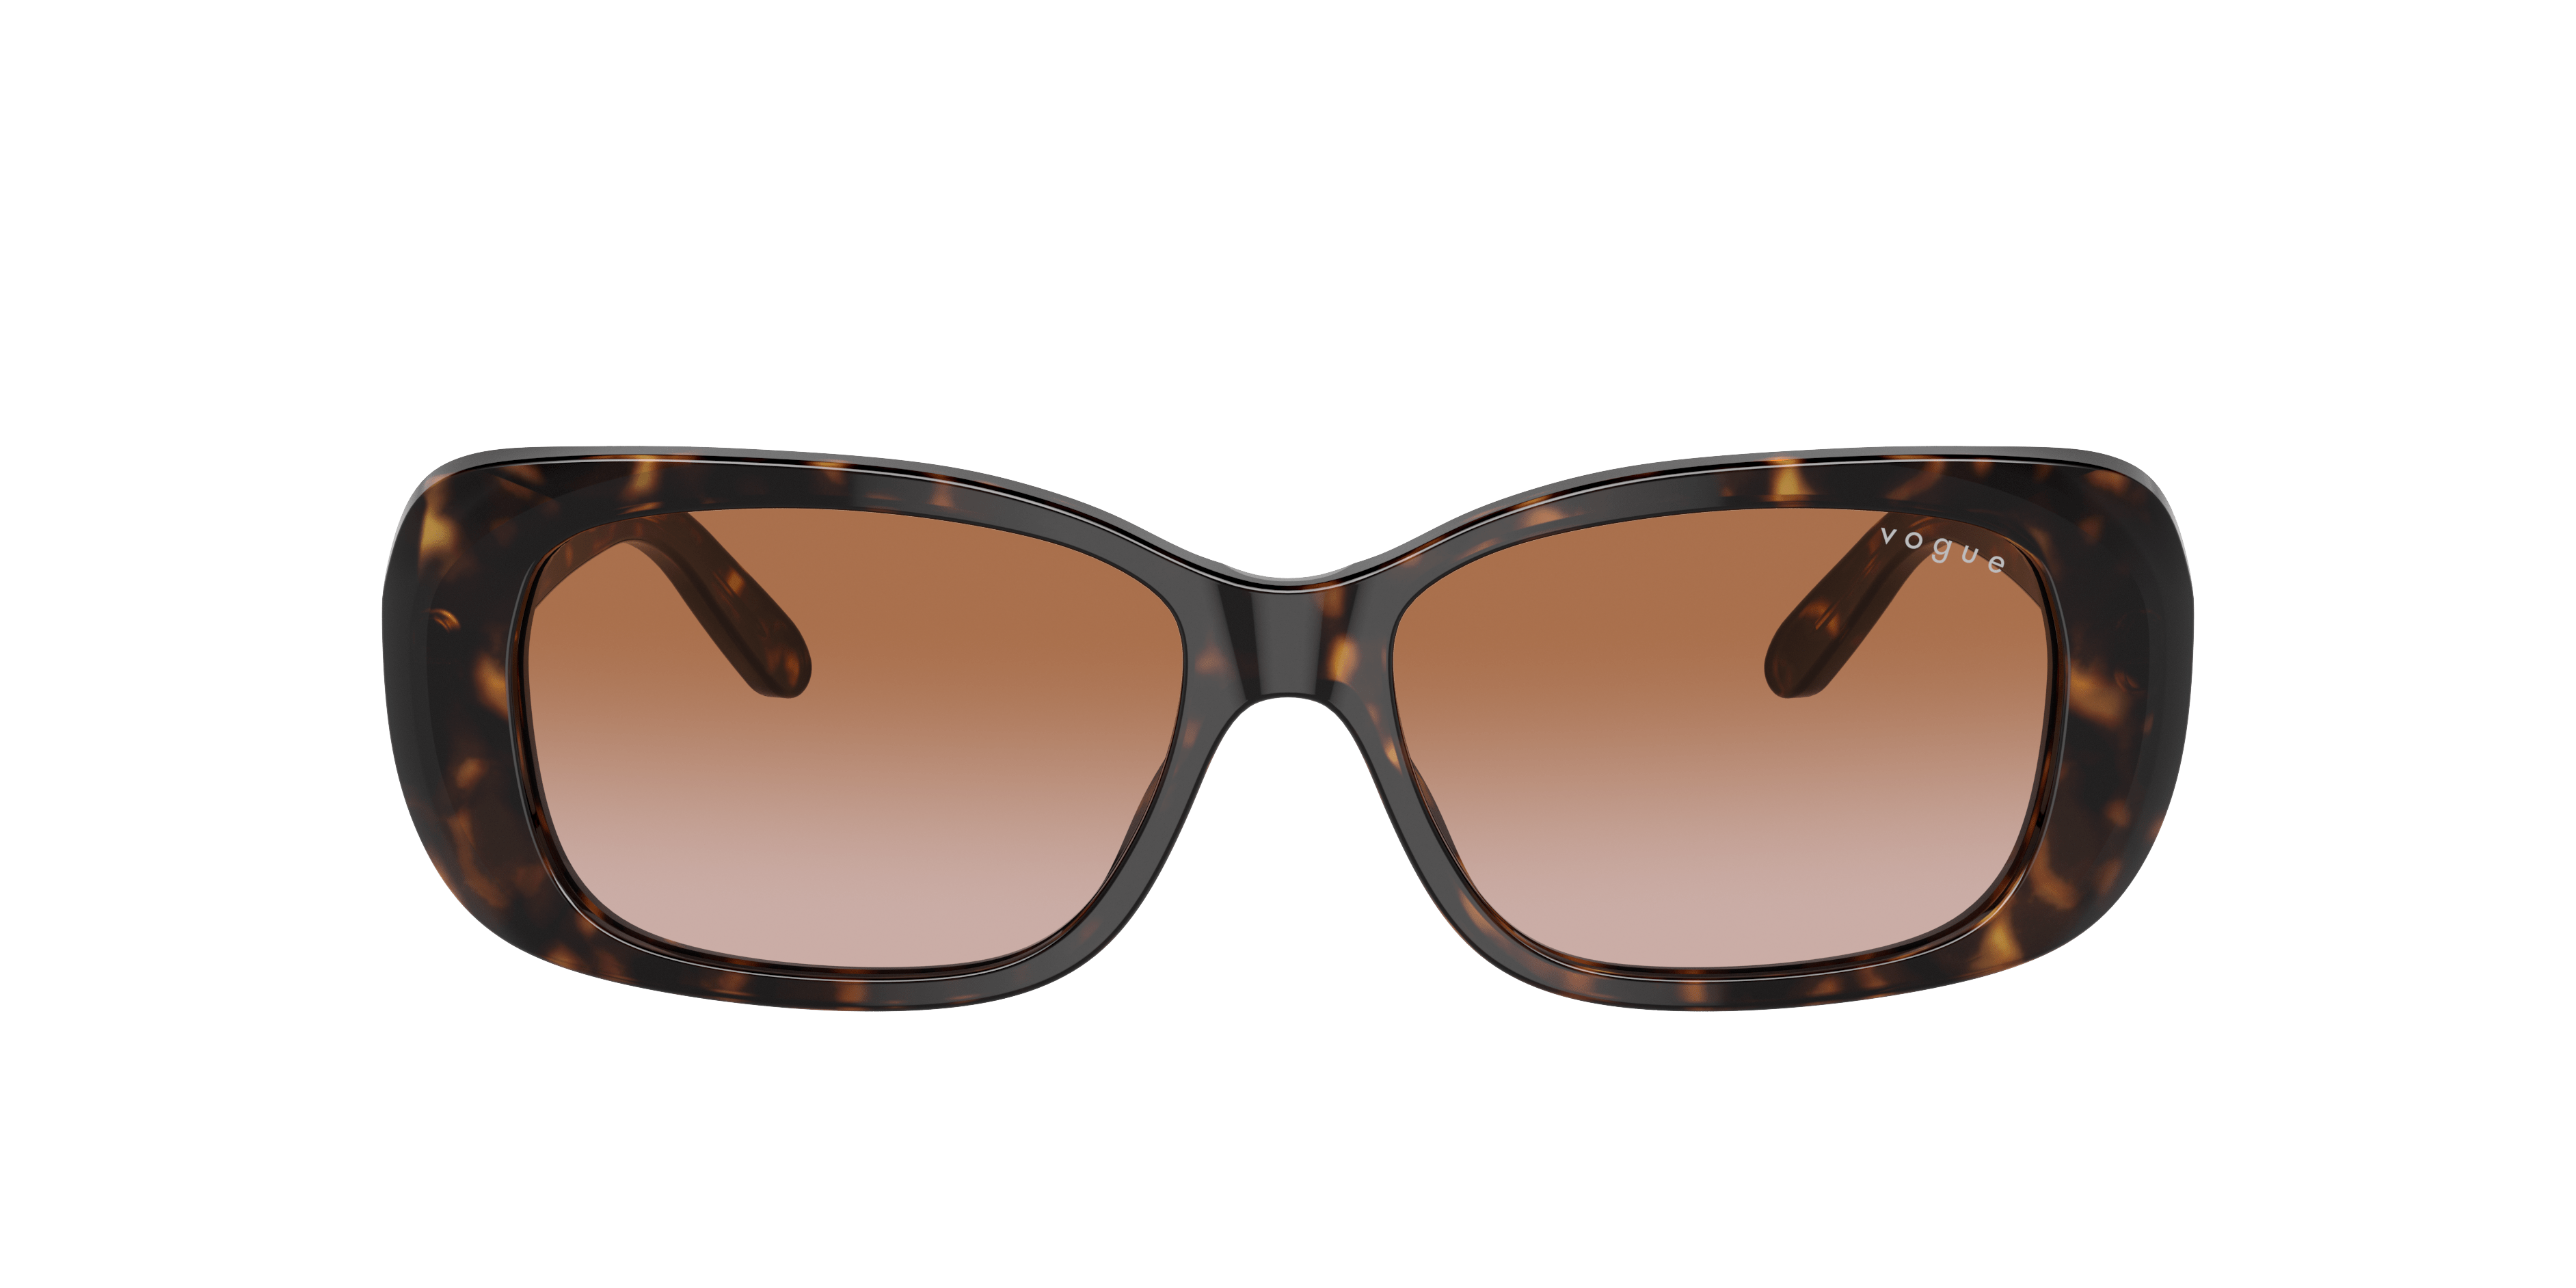 Vogue 0VO2606S Sunglasses in Tortoise Target Optical